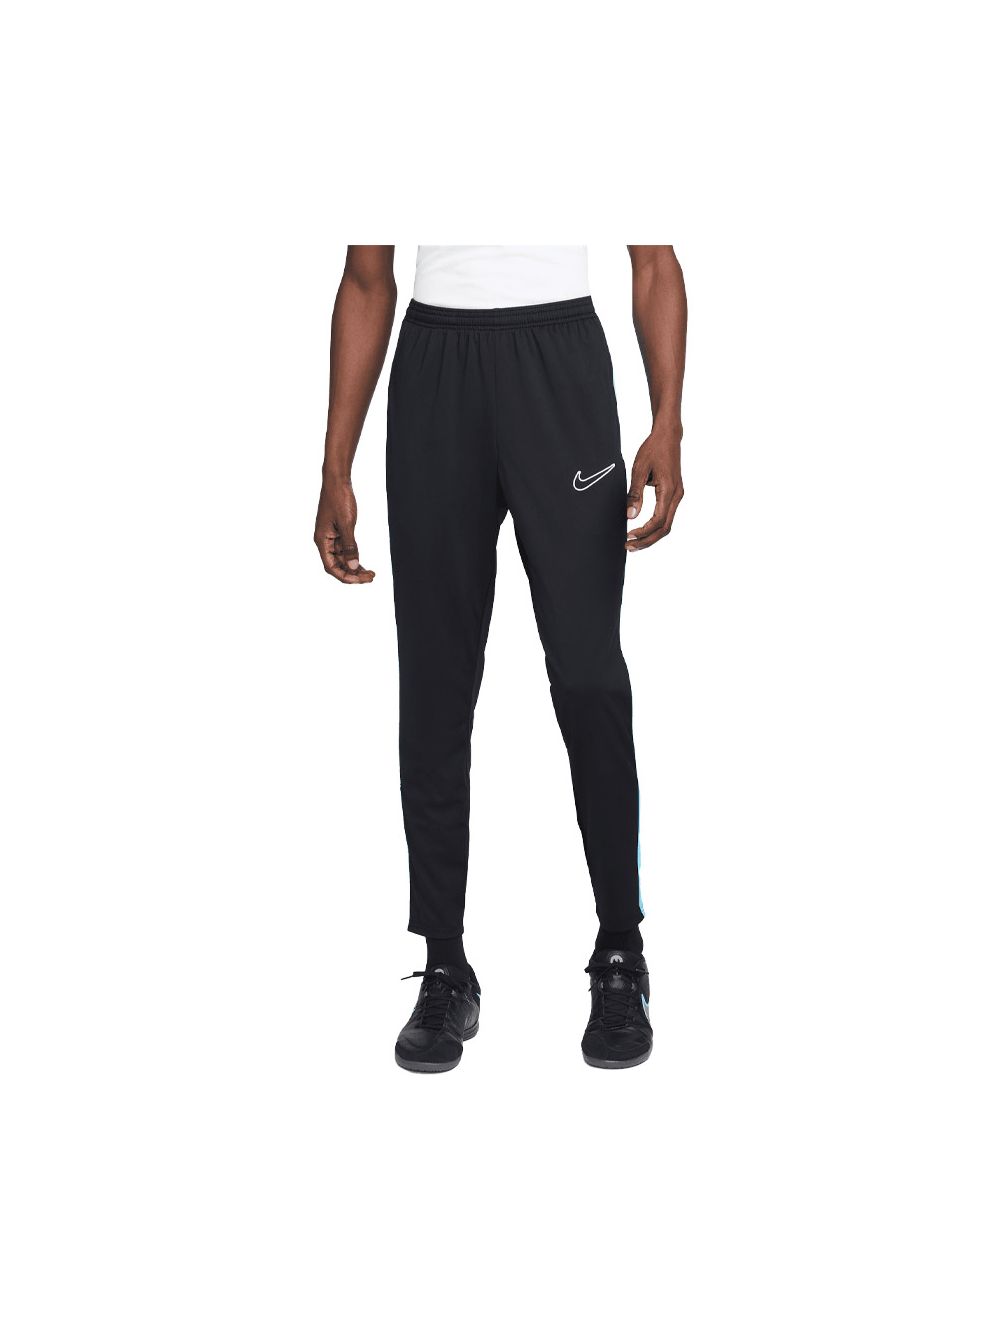 Nike | Dri-FIT Strike Soccer Pants Mens | Performance Tracksuit Bottoms |  SportsDirect.com